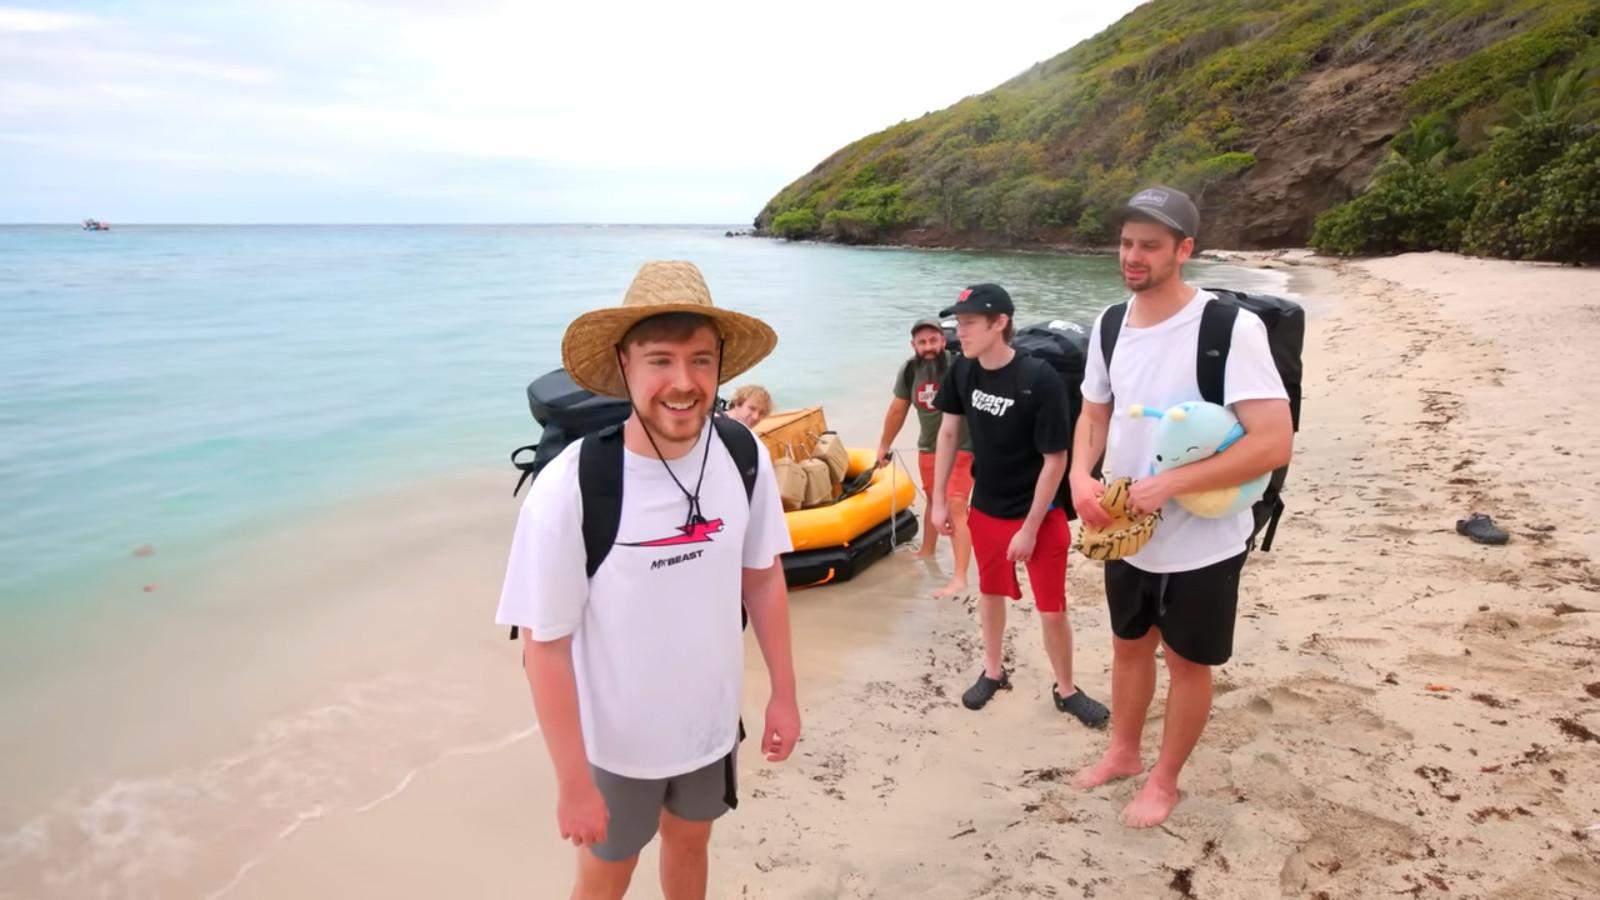 MrBeast and his crew stood on a beach